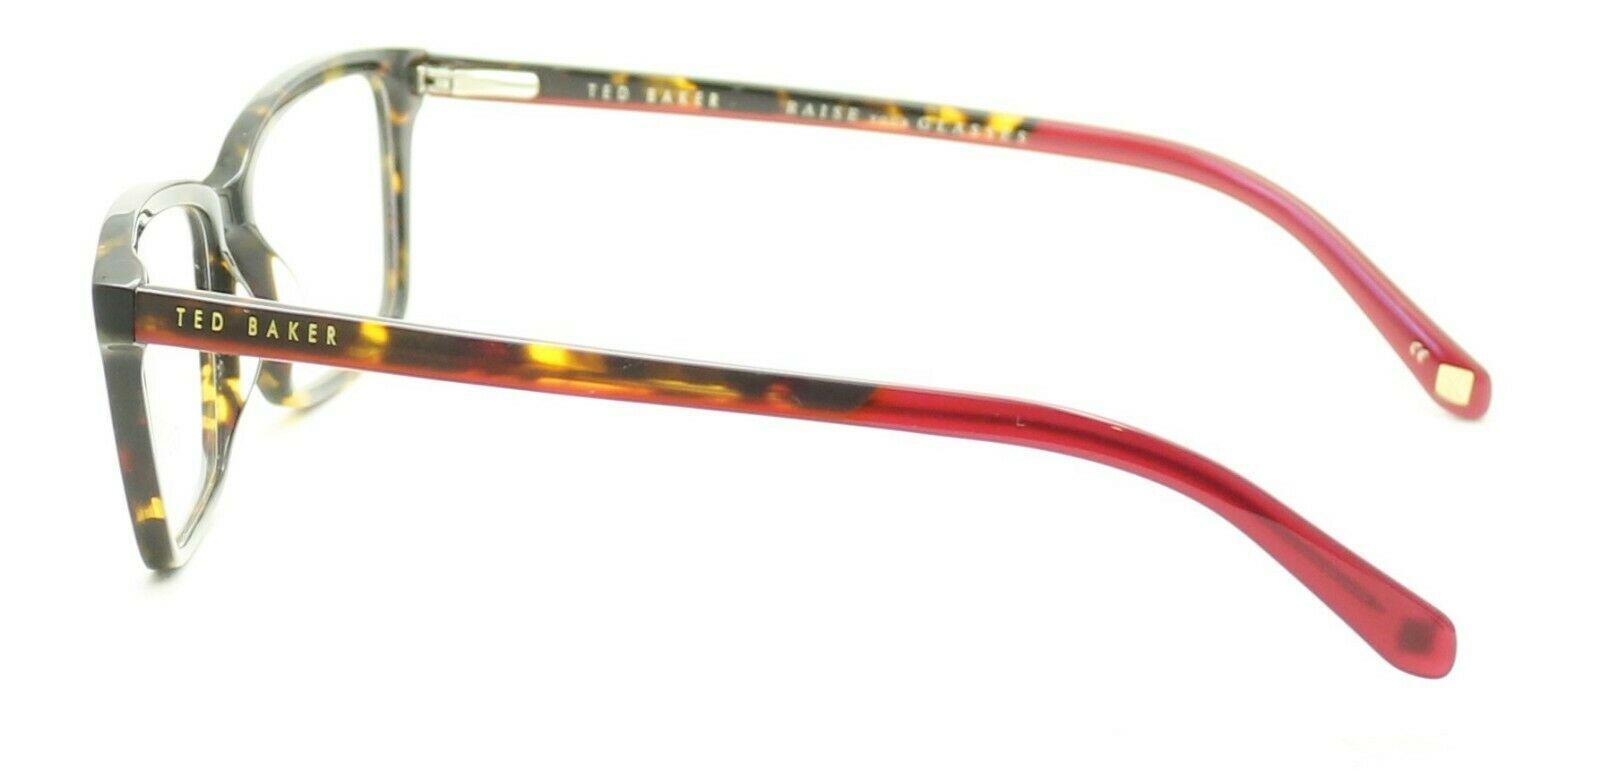 TED BAKER Hooper 8159 145 54mm Eyewear FRAMES Glasses Eyeglasses RX Optical -New